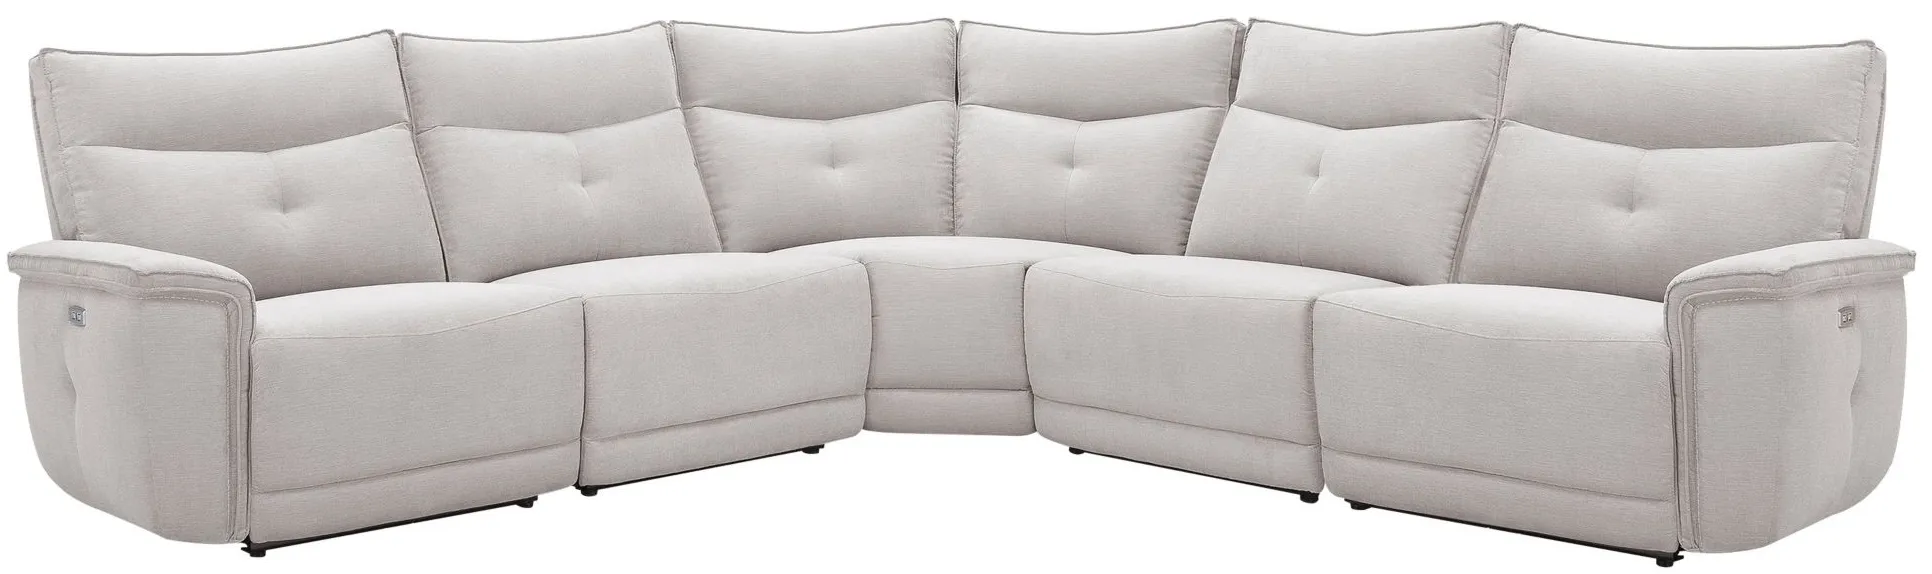 Graceland 5-pc Sectional Sofa W/Power Headrest in Mist Gray by Bellanest